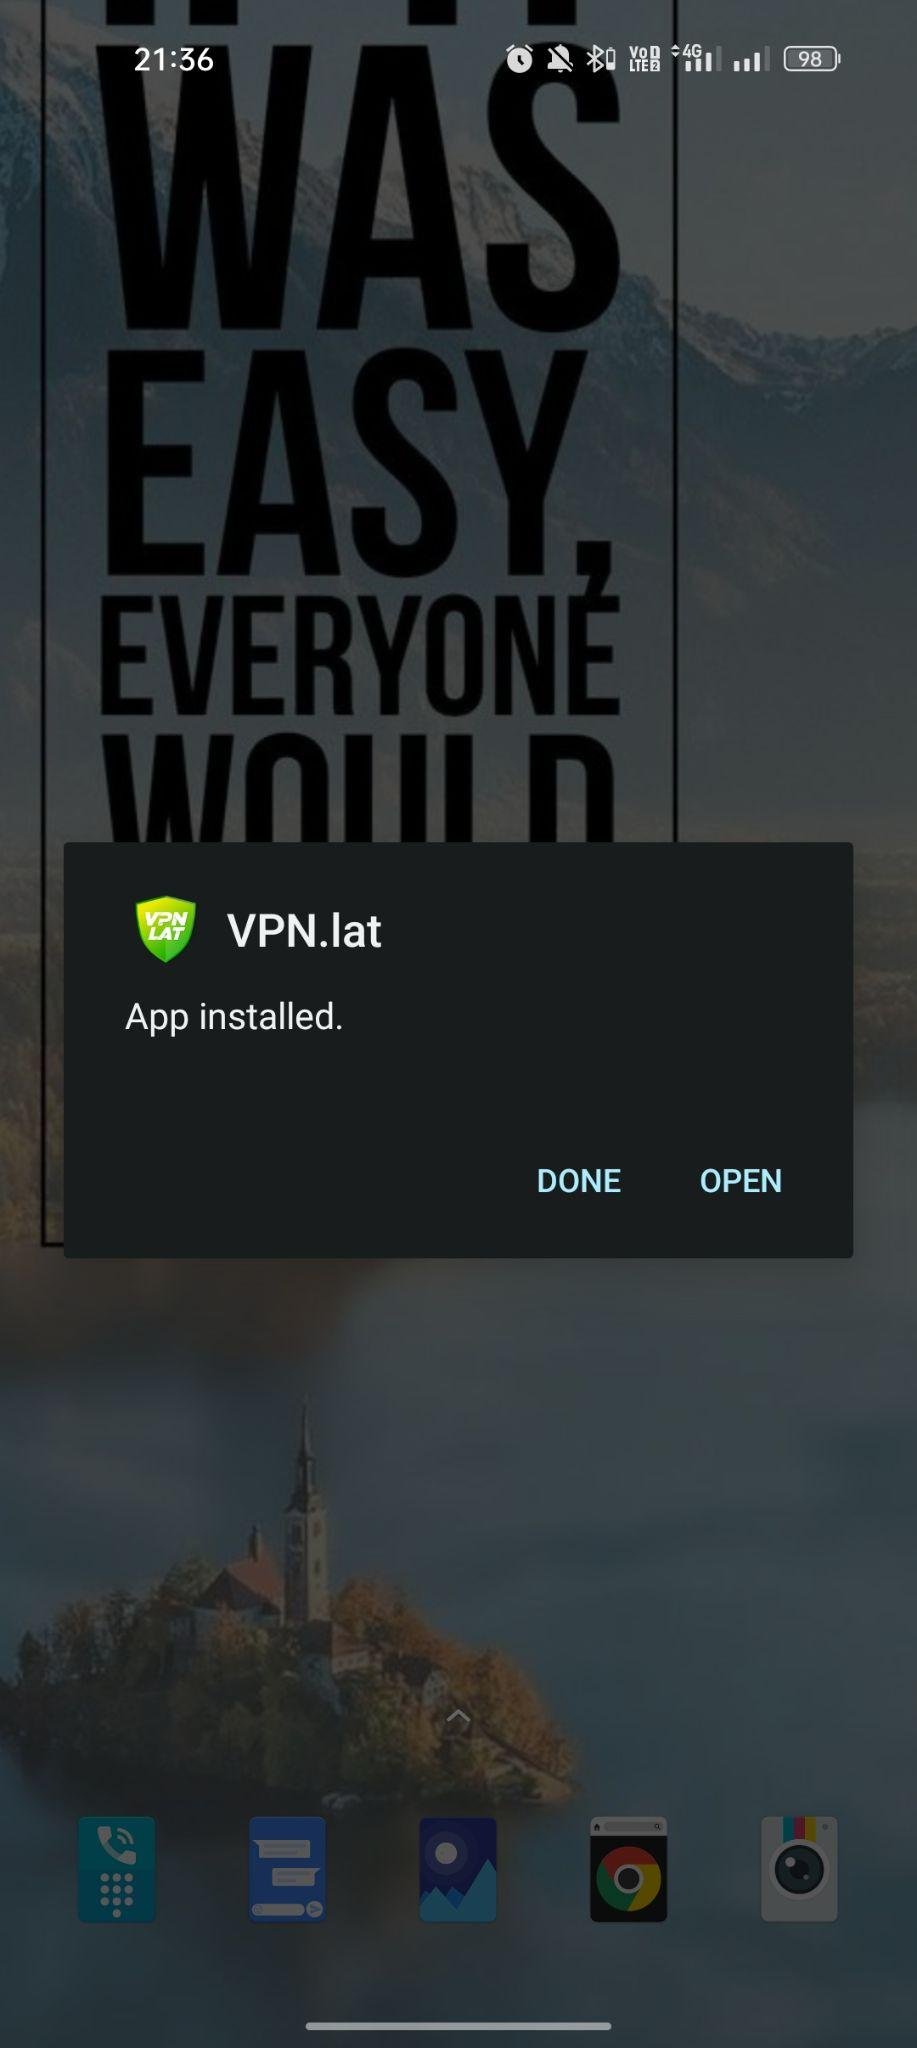 VPN.Lat apk installed